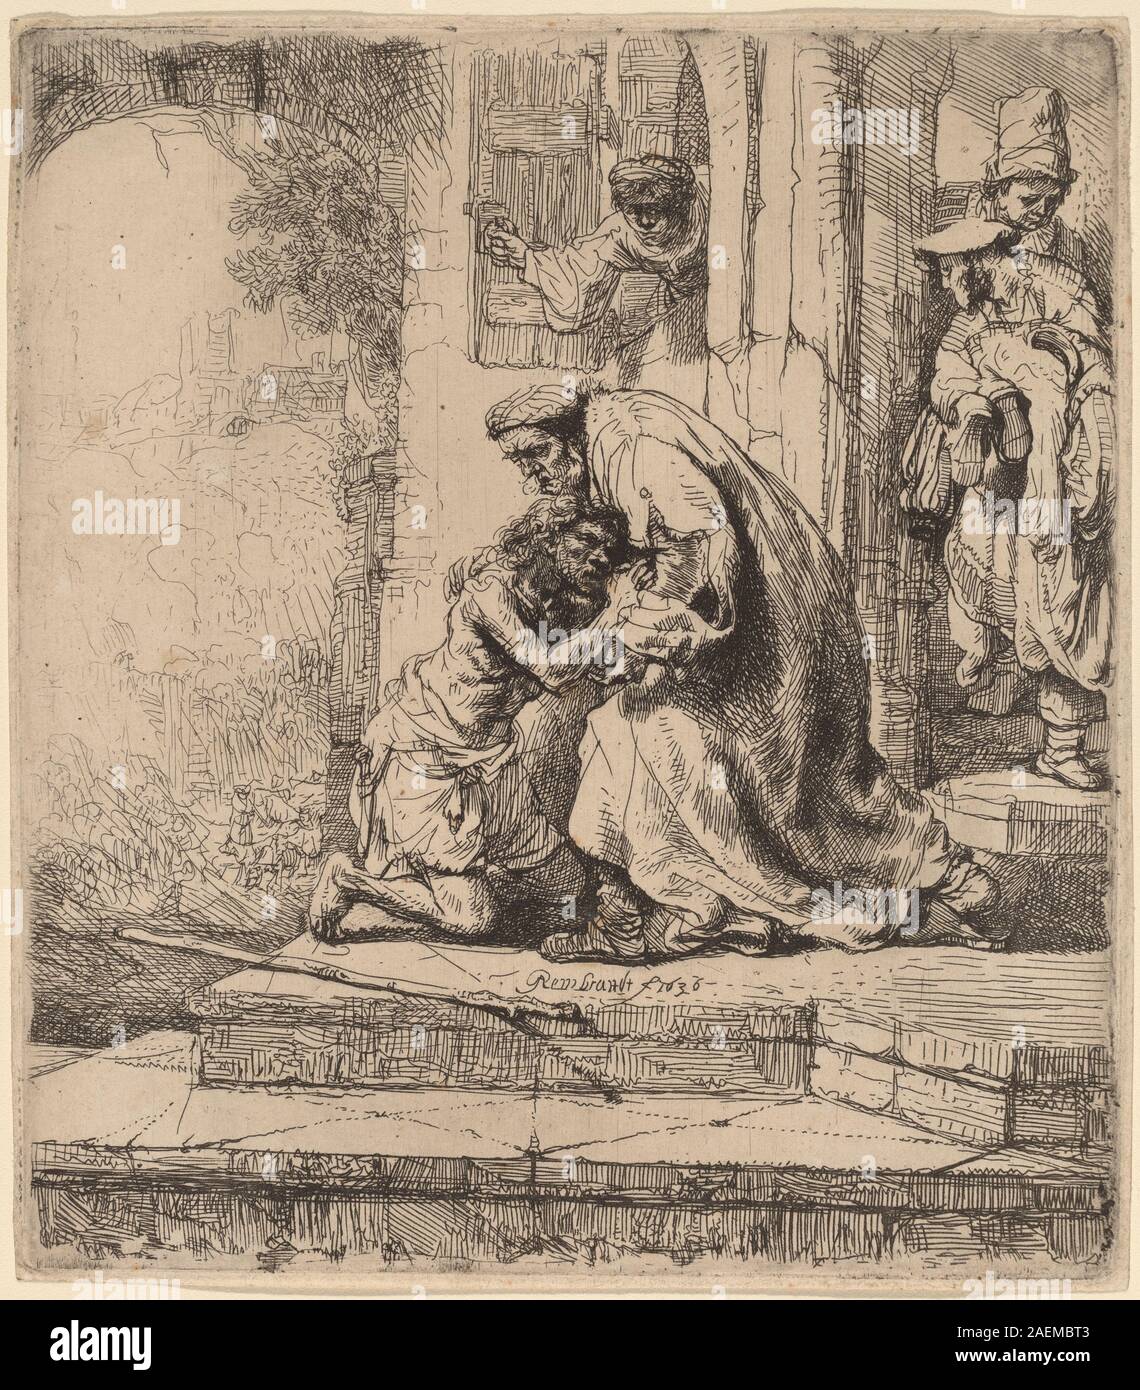 Rembrandt van Rijn, The Return of the Prodigal Son, 1636, The Return of the Prodigal Son; 1636 date Stock Photo